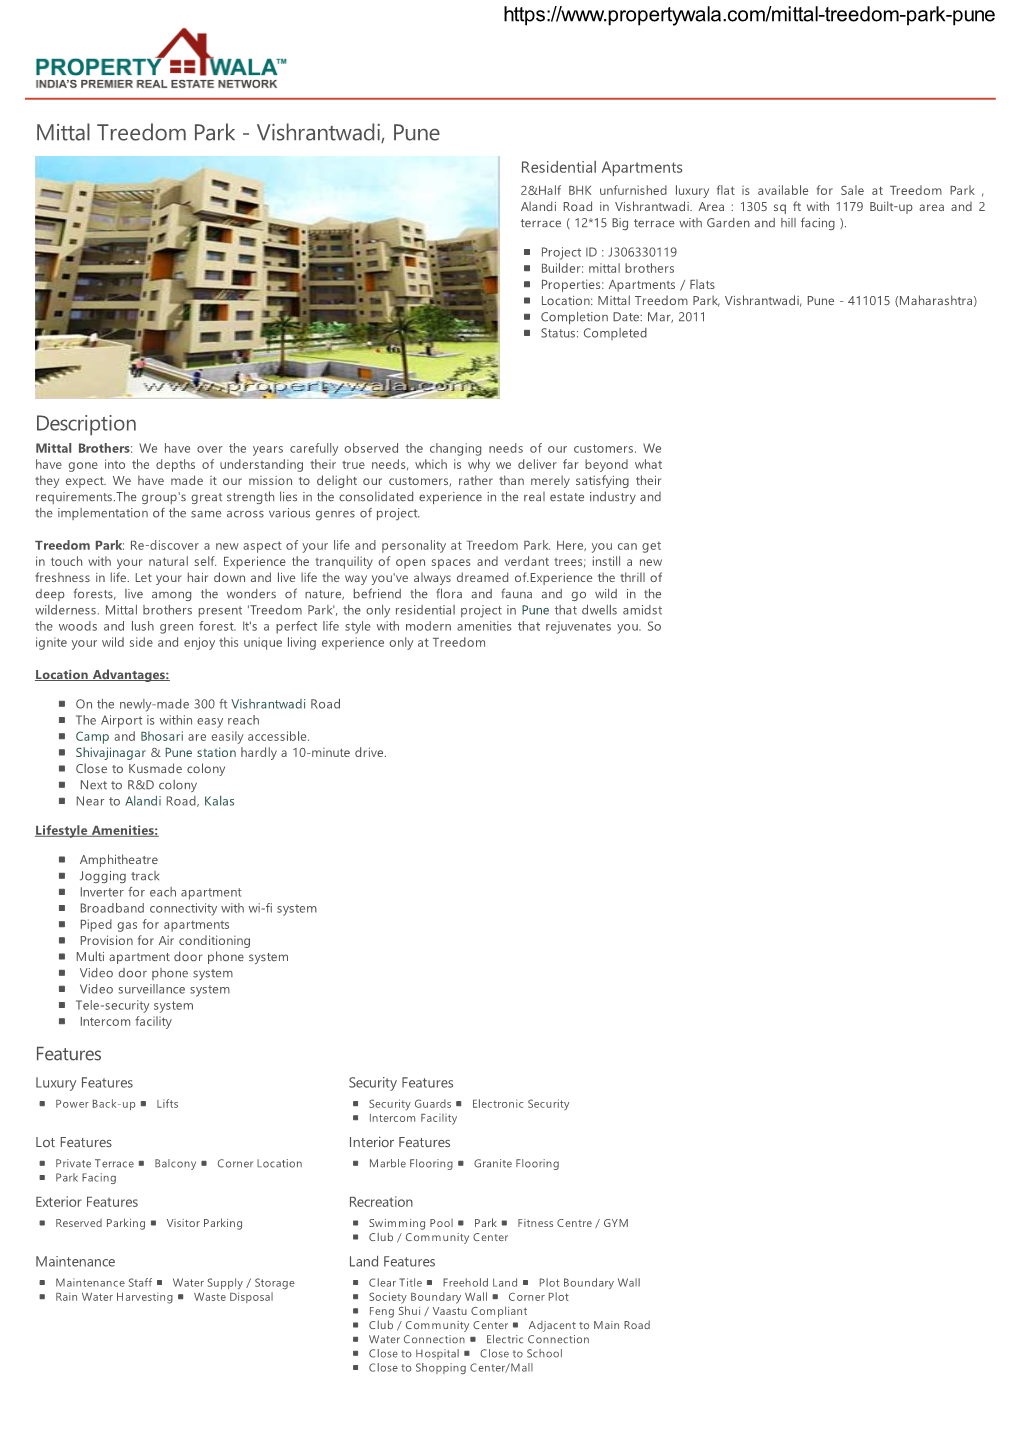 Mittal Treedom Park - Vishrantwadi, Pune Residential Apartments 2&Half BHK Unfurnished Luxury Flat Is Available for Sale at Treedom Park , Alandi Road in Vishrantwadi